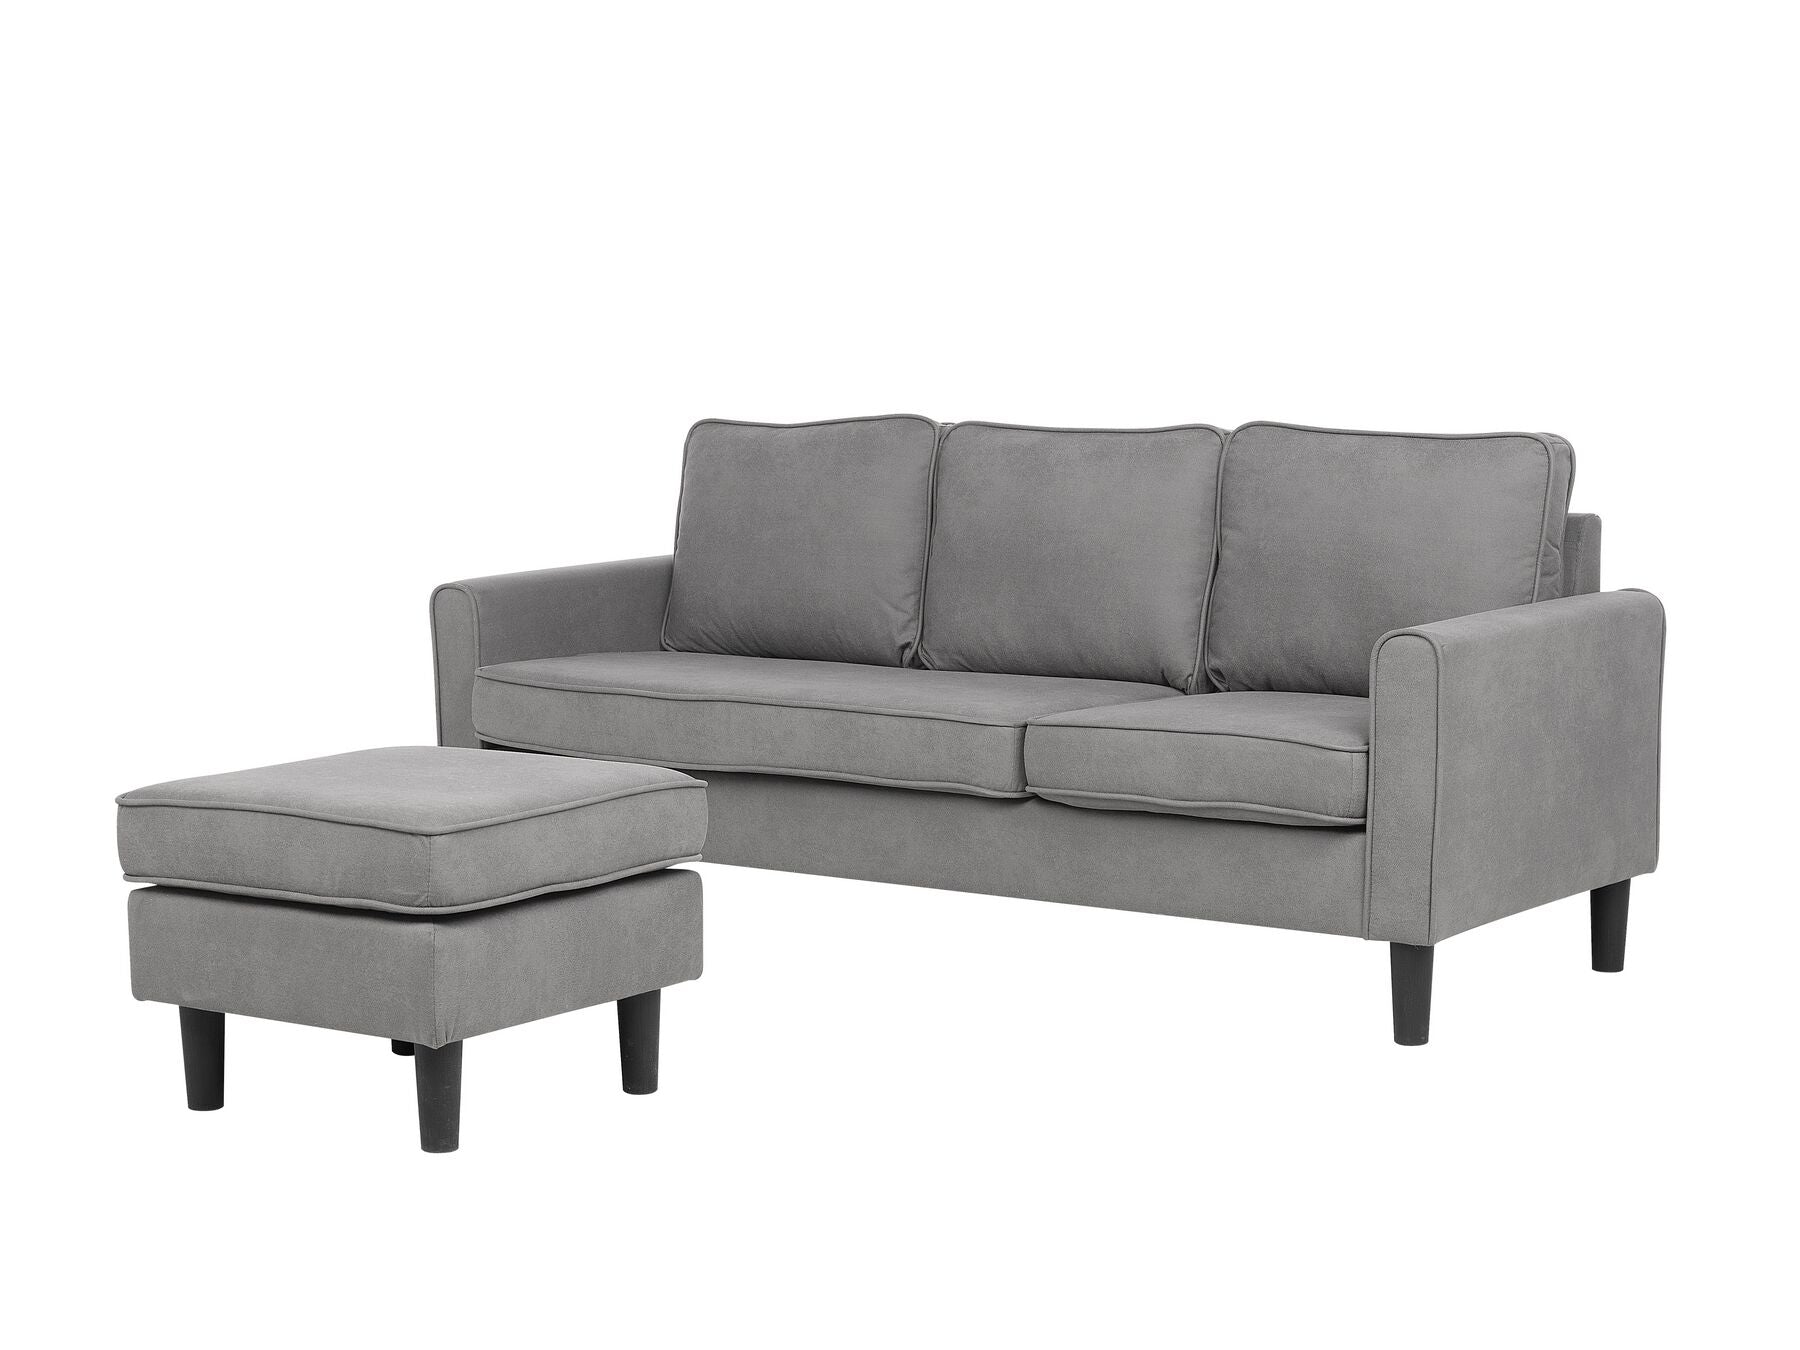 Avesta 3 Seater Fabric Sofa with Ottoman (Grey)